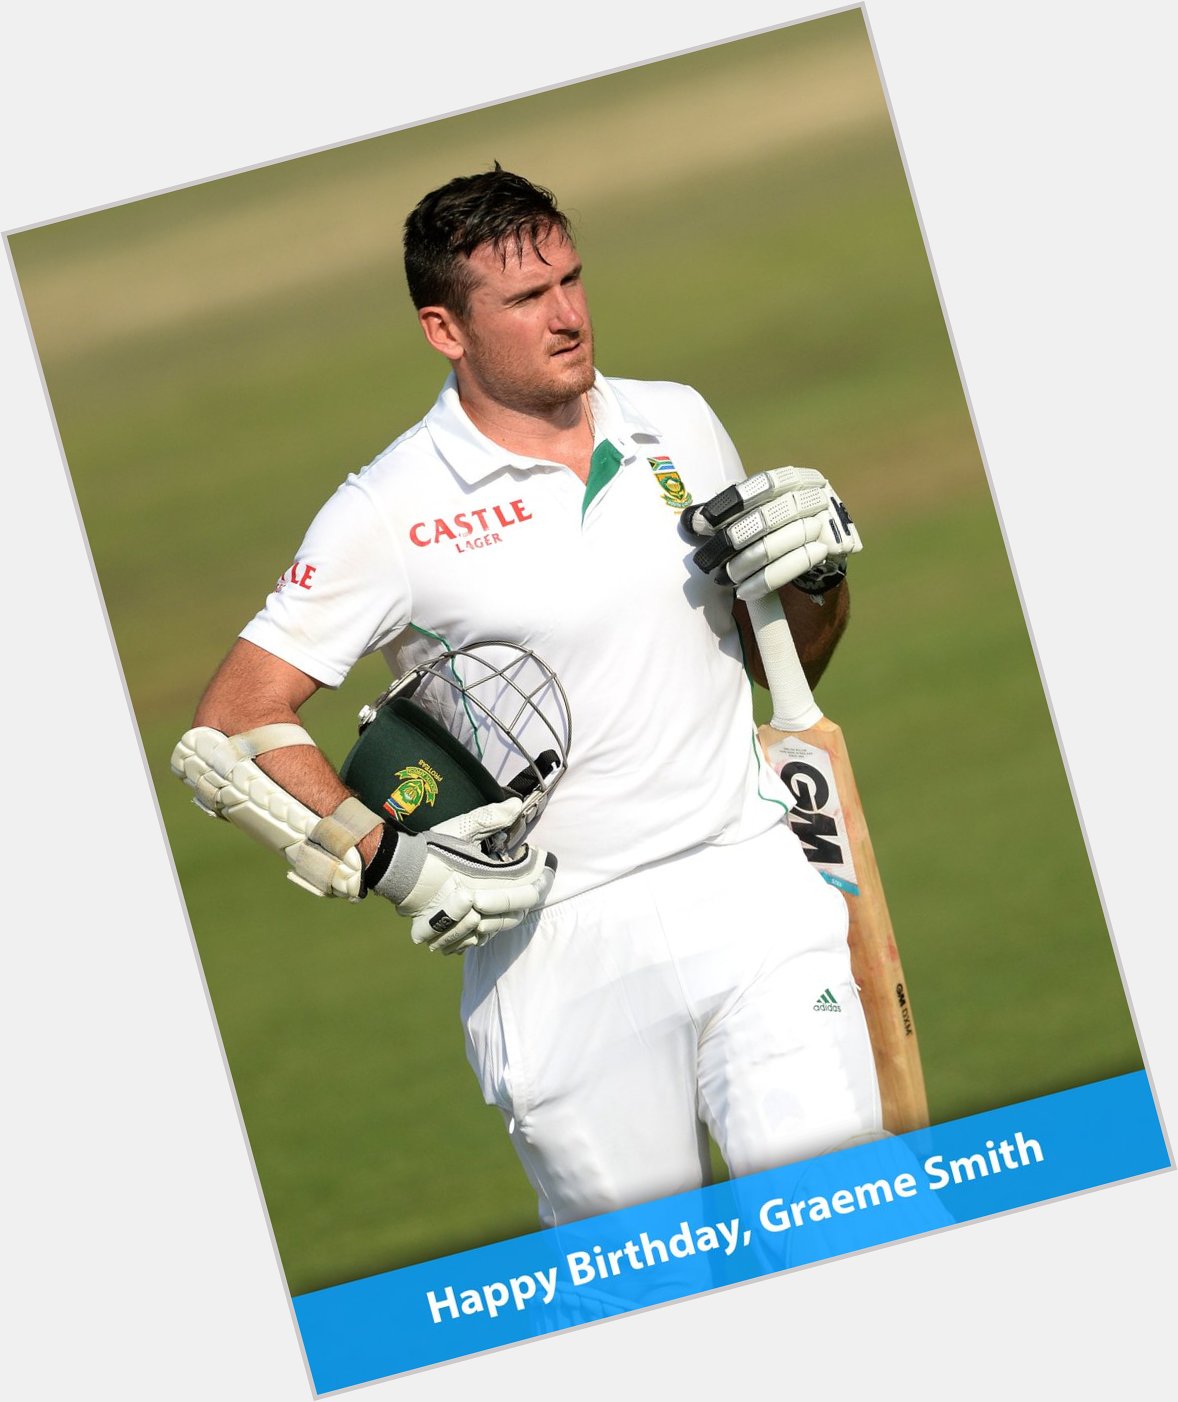  Happy 36th birthday to Graeme Smith.  